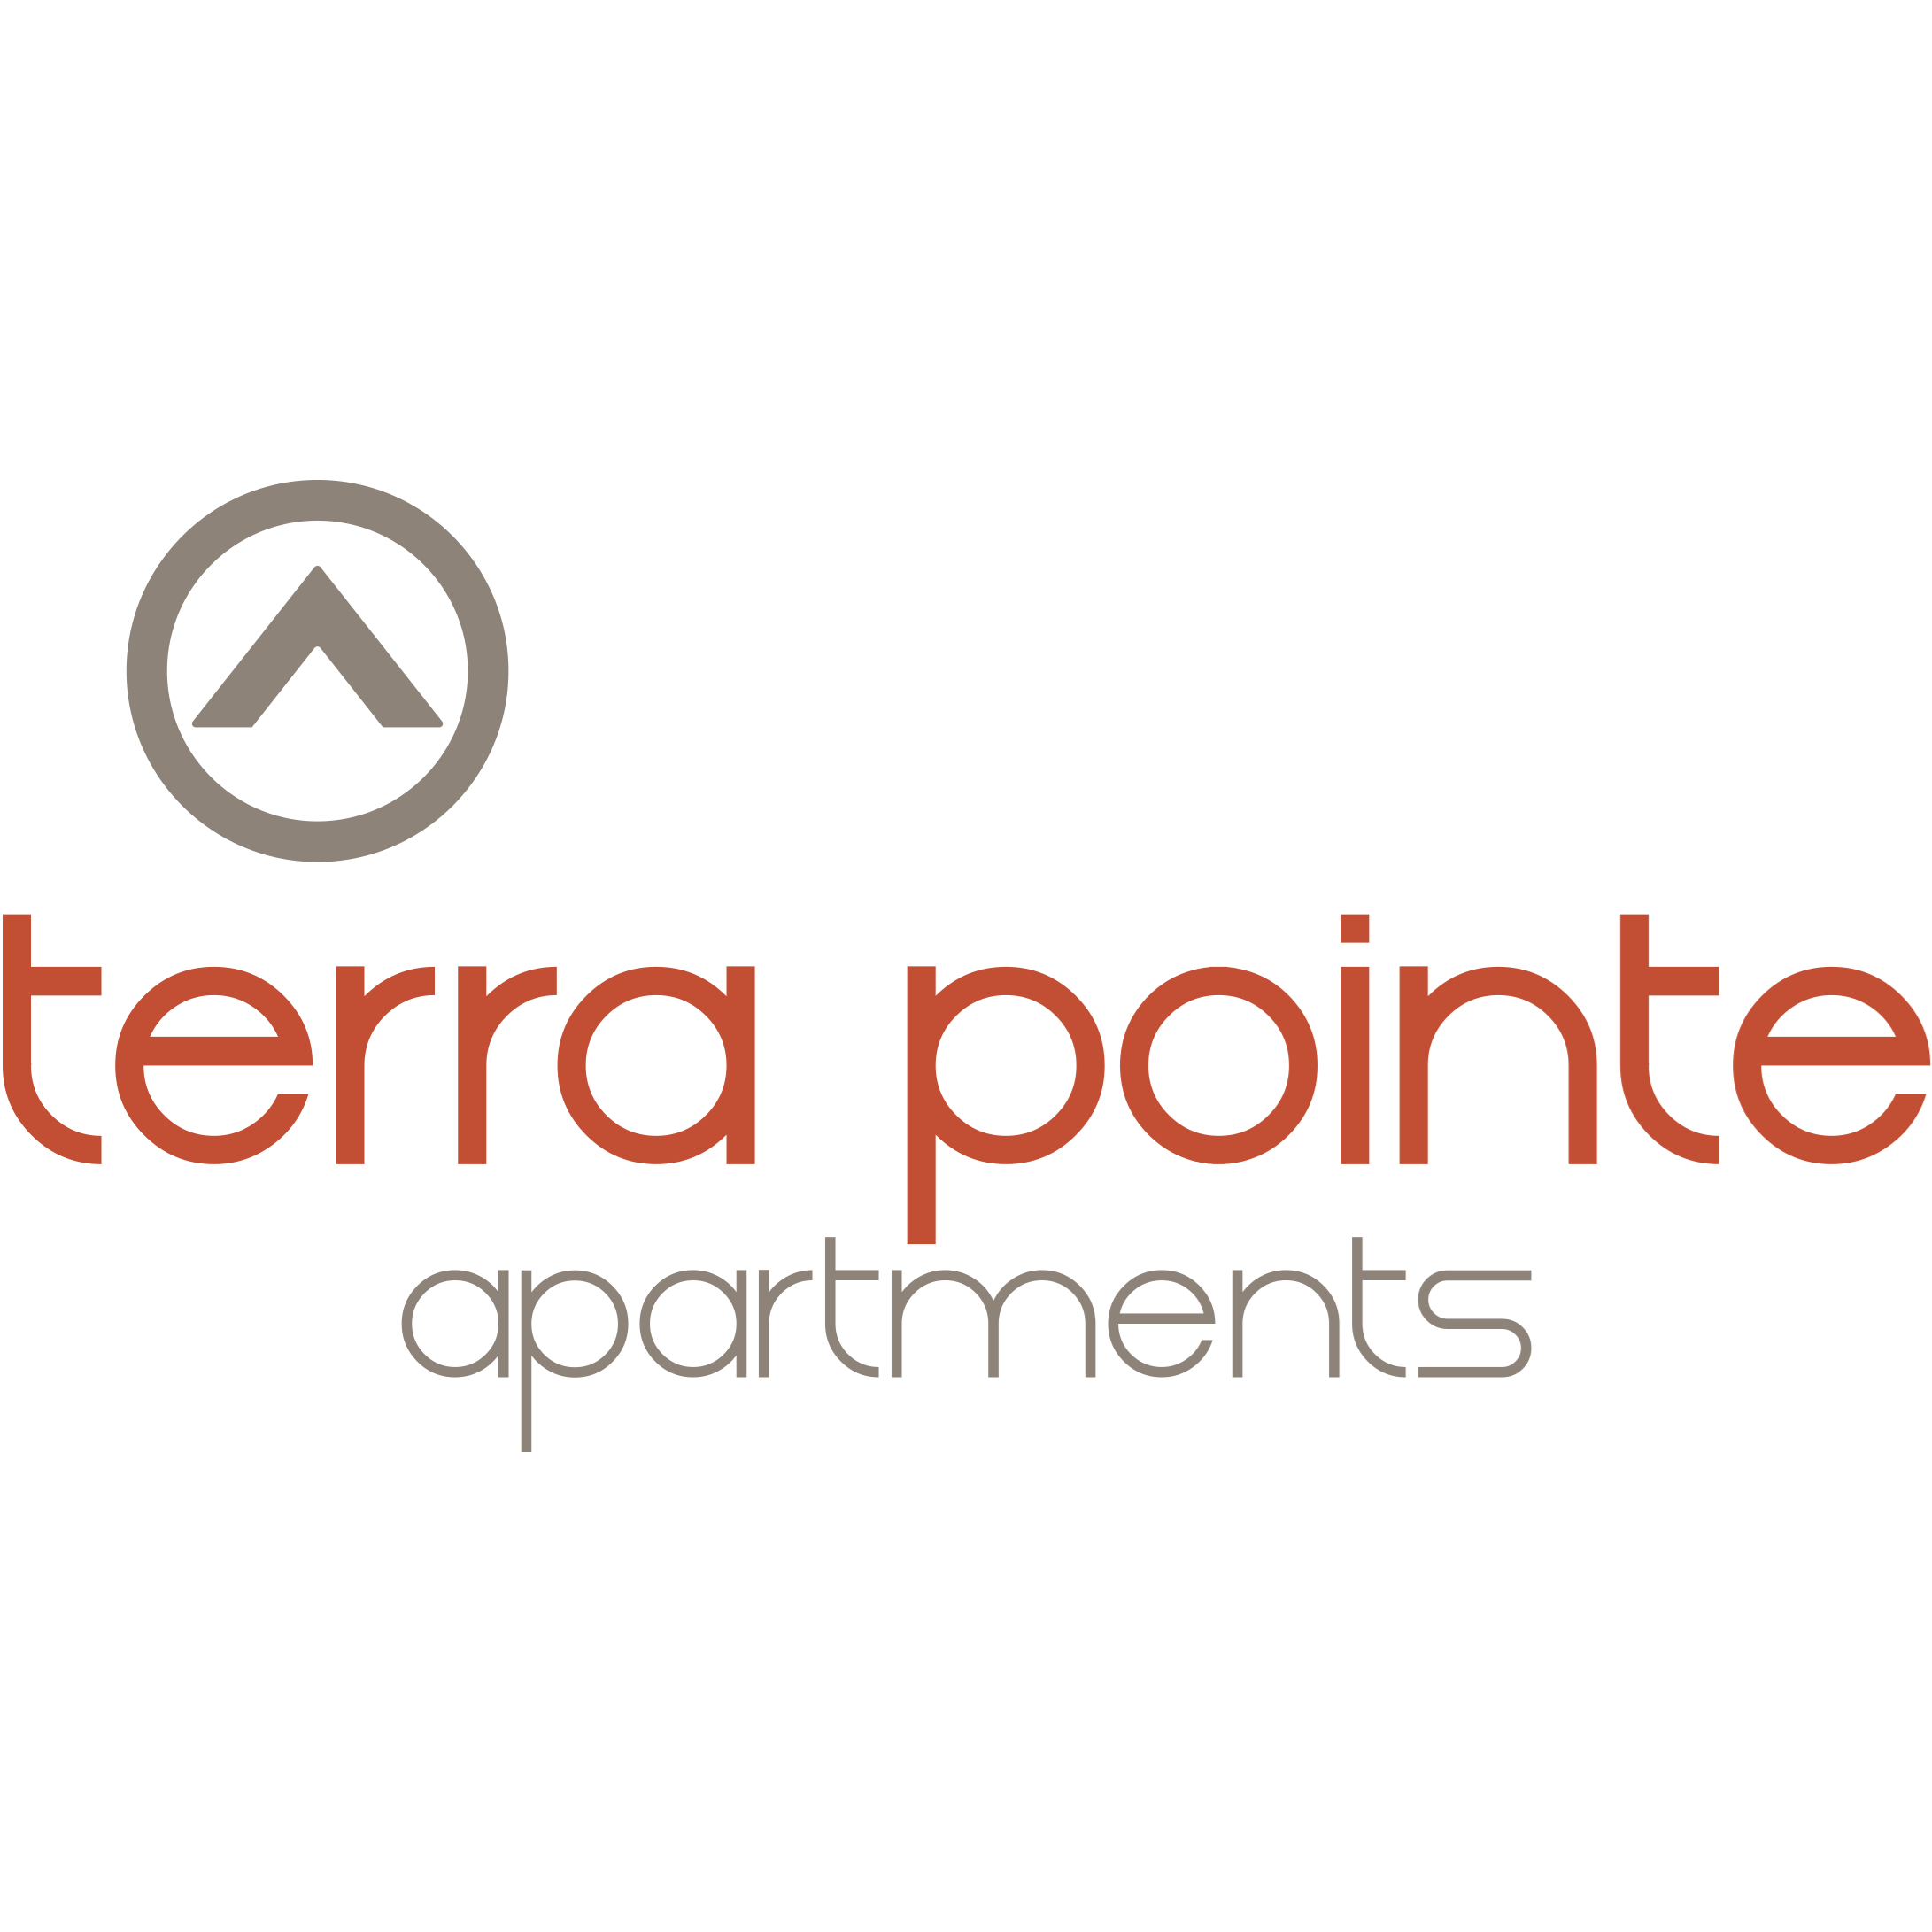 Terra Pointe Apartments - St. Paul, MN 55119 - (651)739-4100 | ShowMeLocal.com